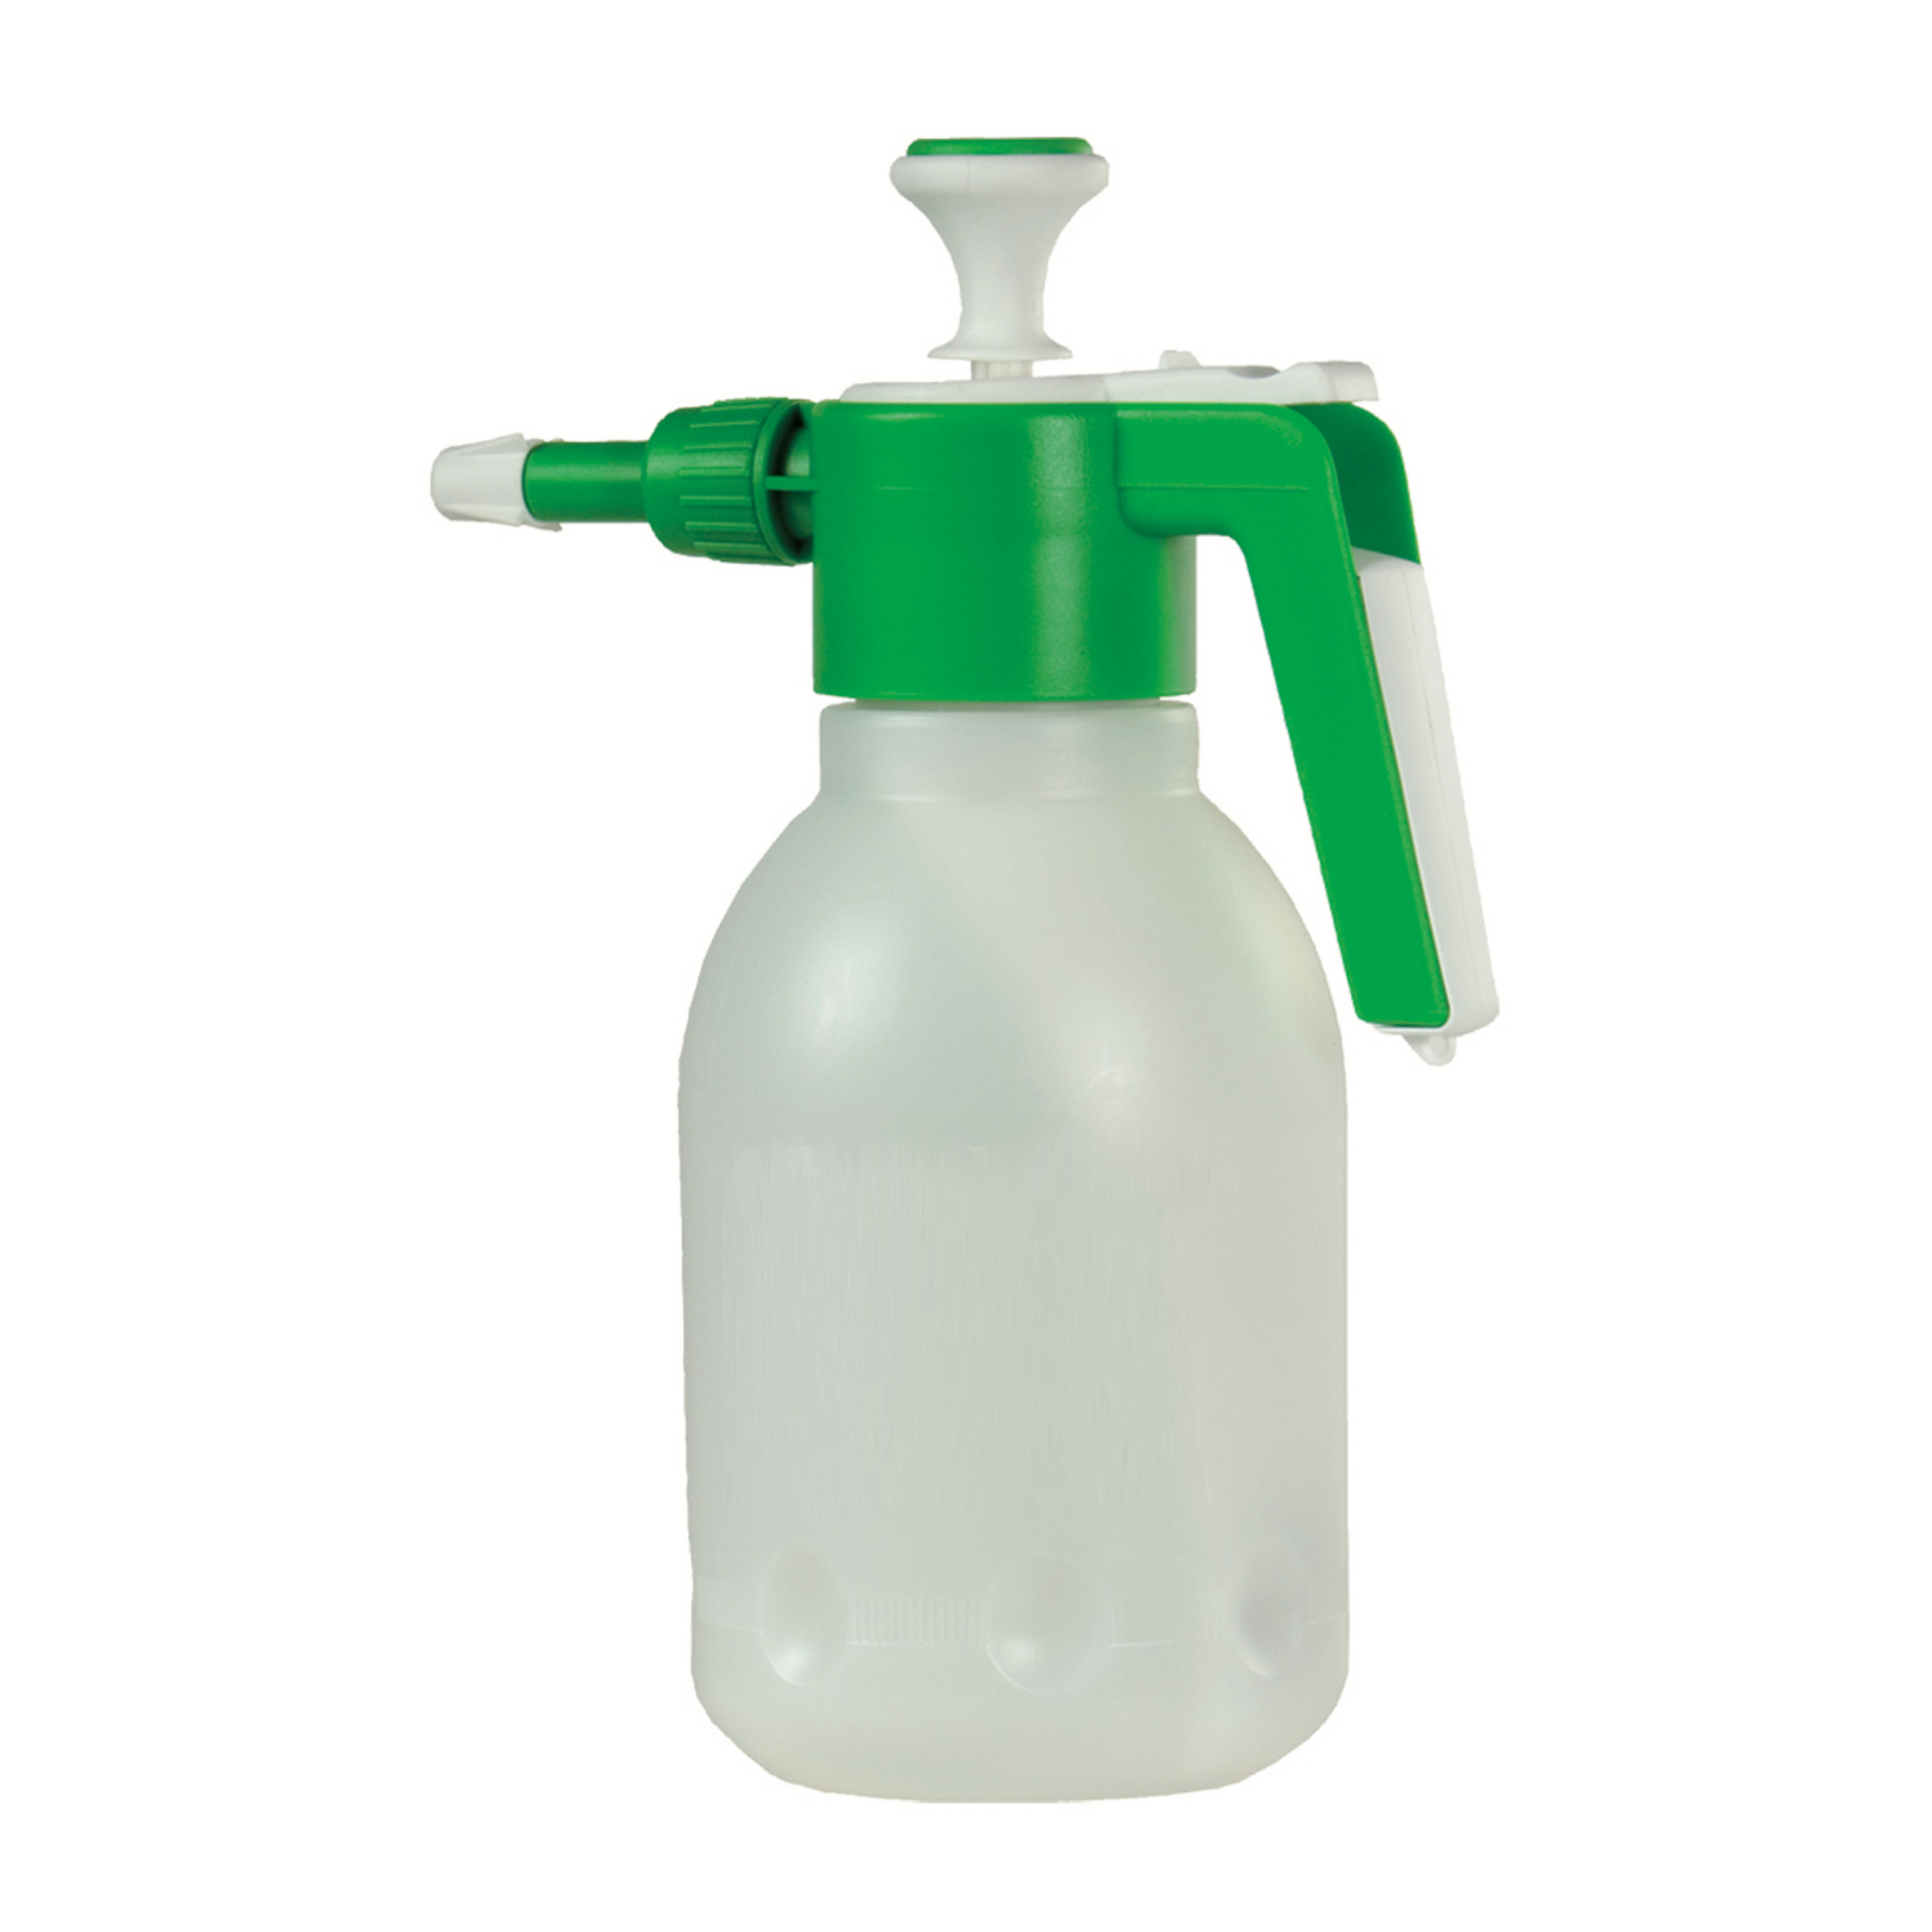 Dr. Cup of print sprays SR 111 - 1.5 liters